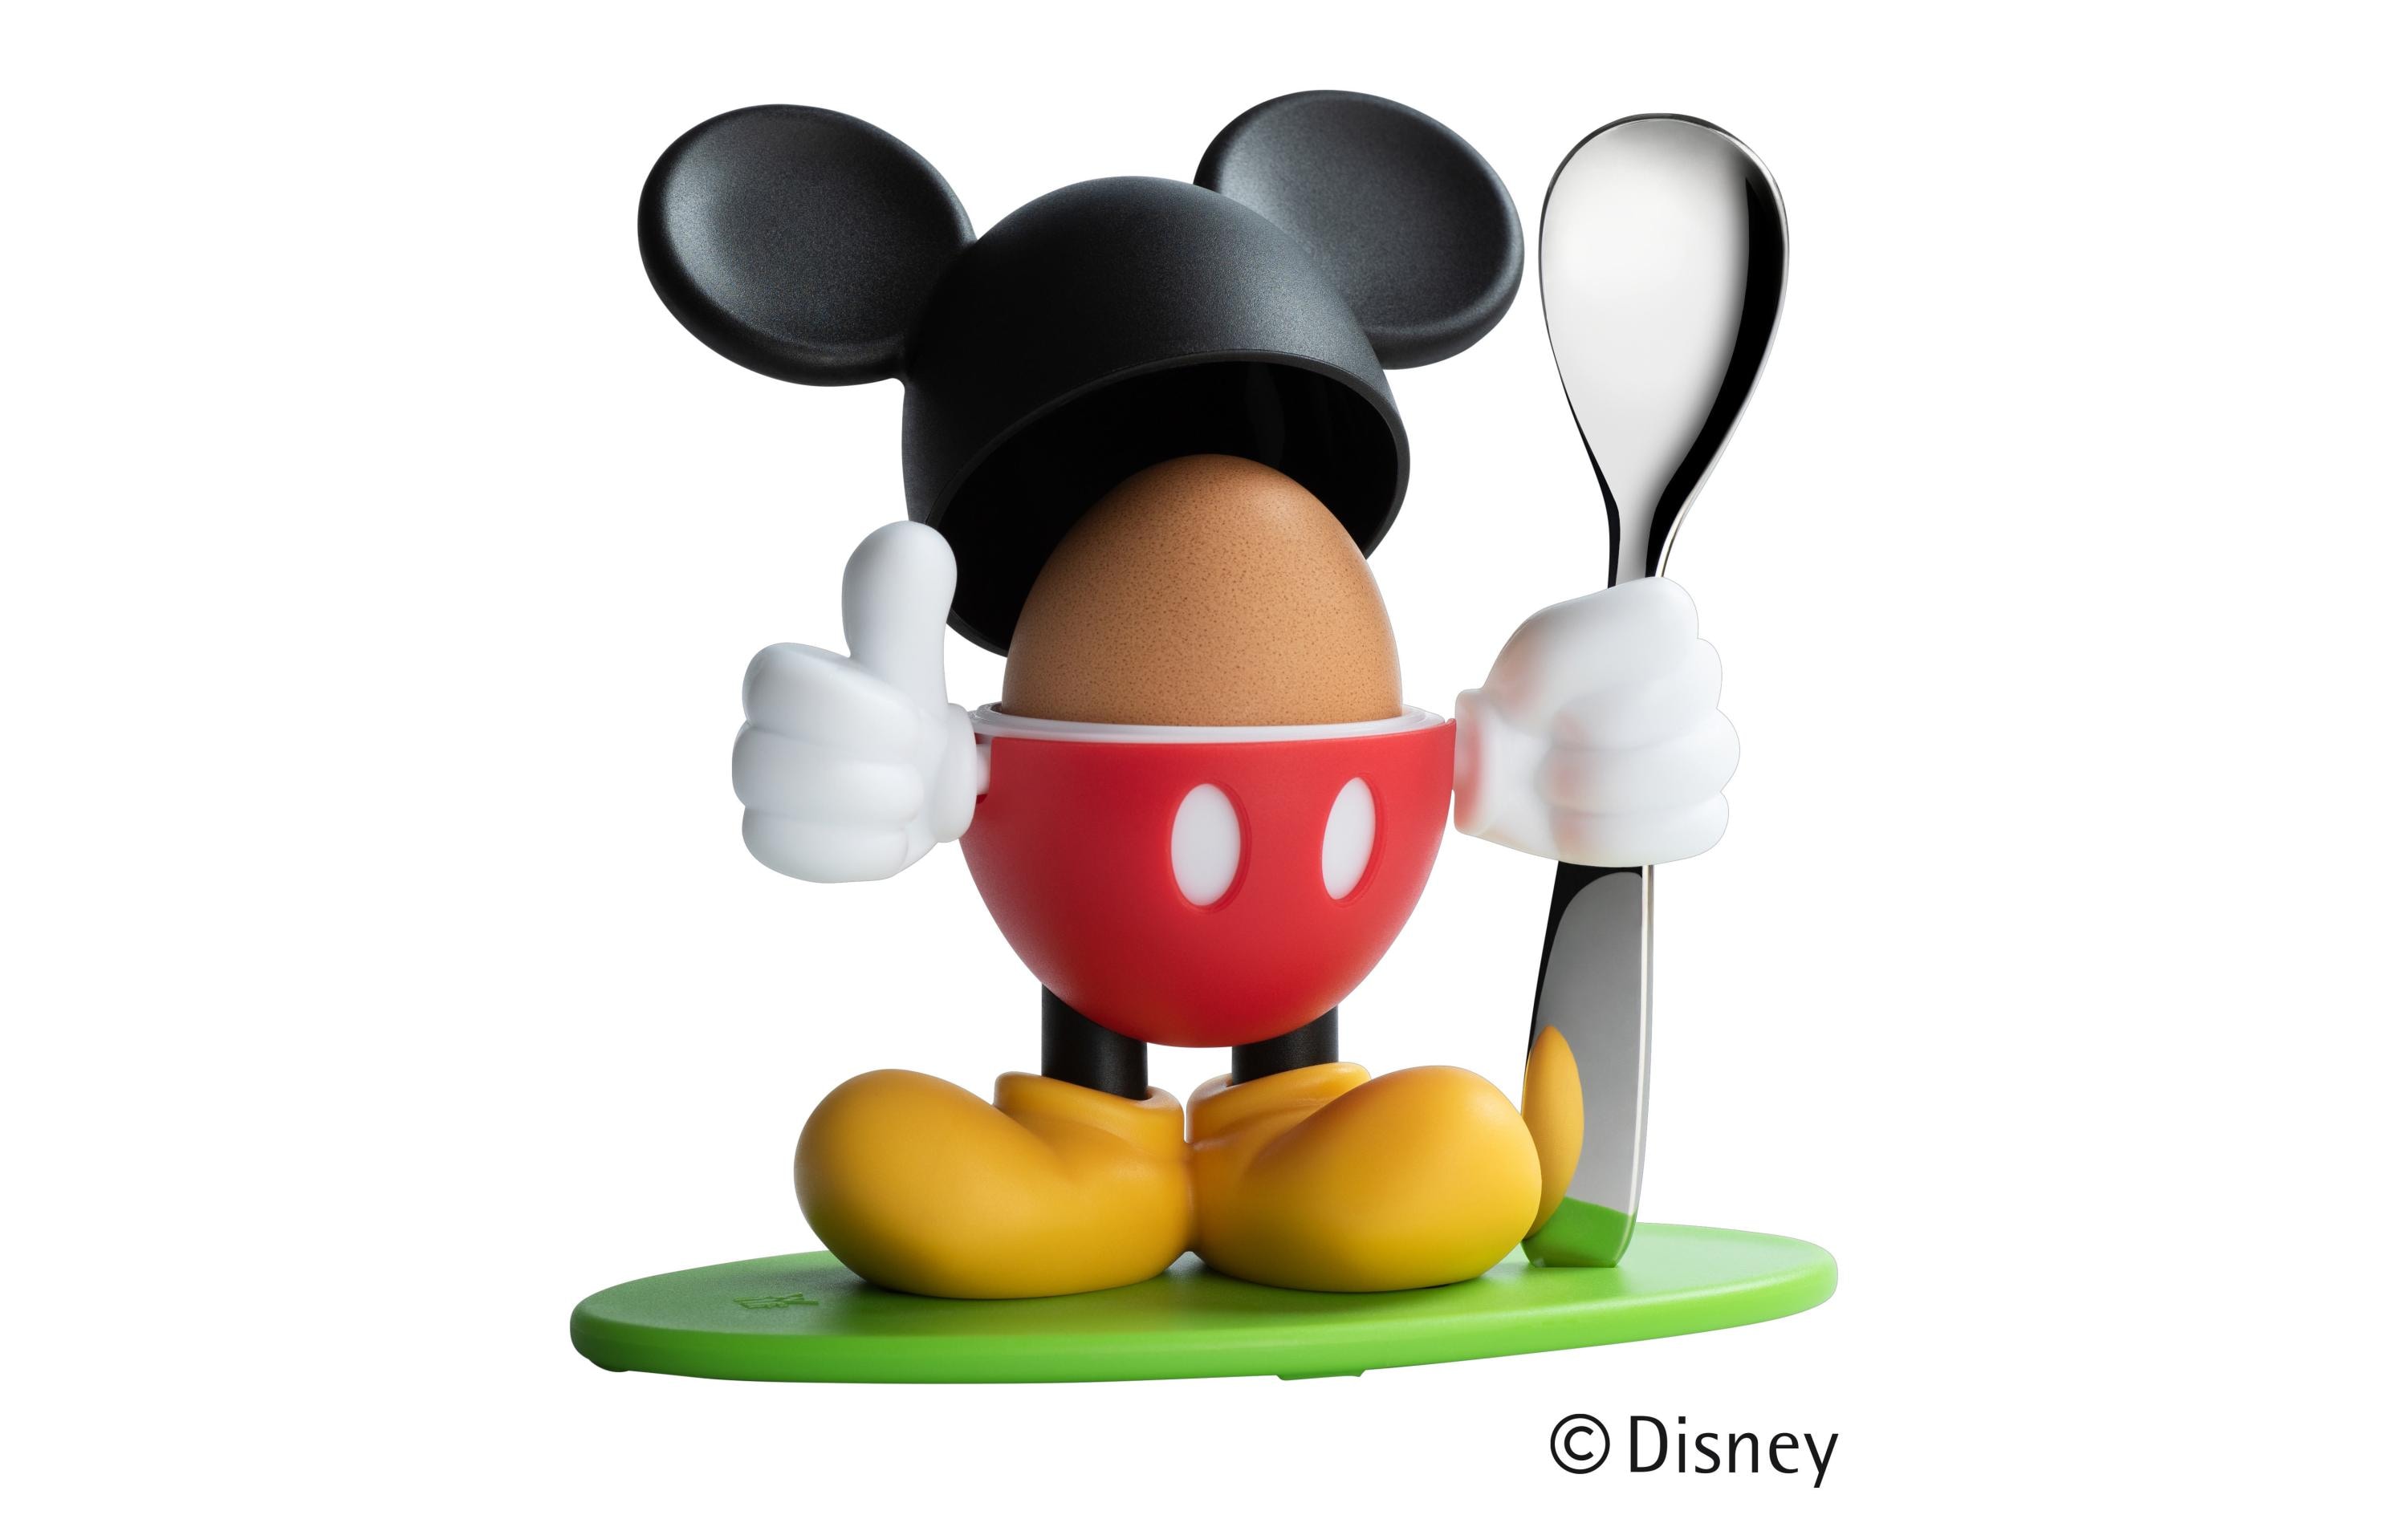 WMF Eierbecher Mickey Mouse Mehrfarbig